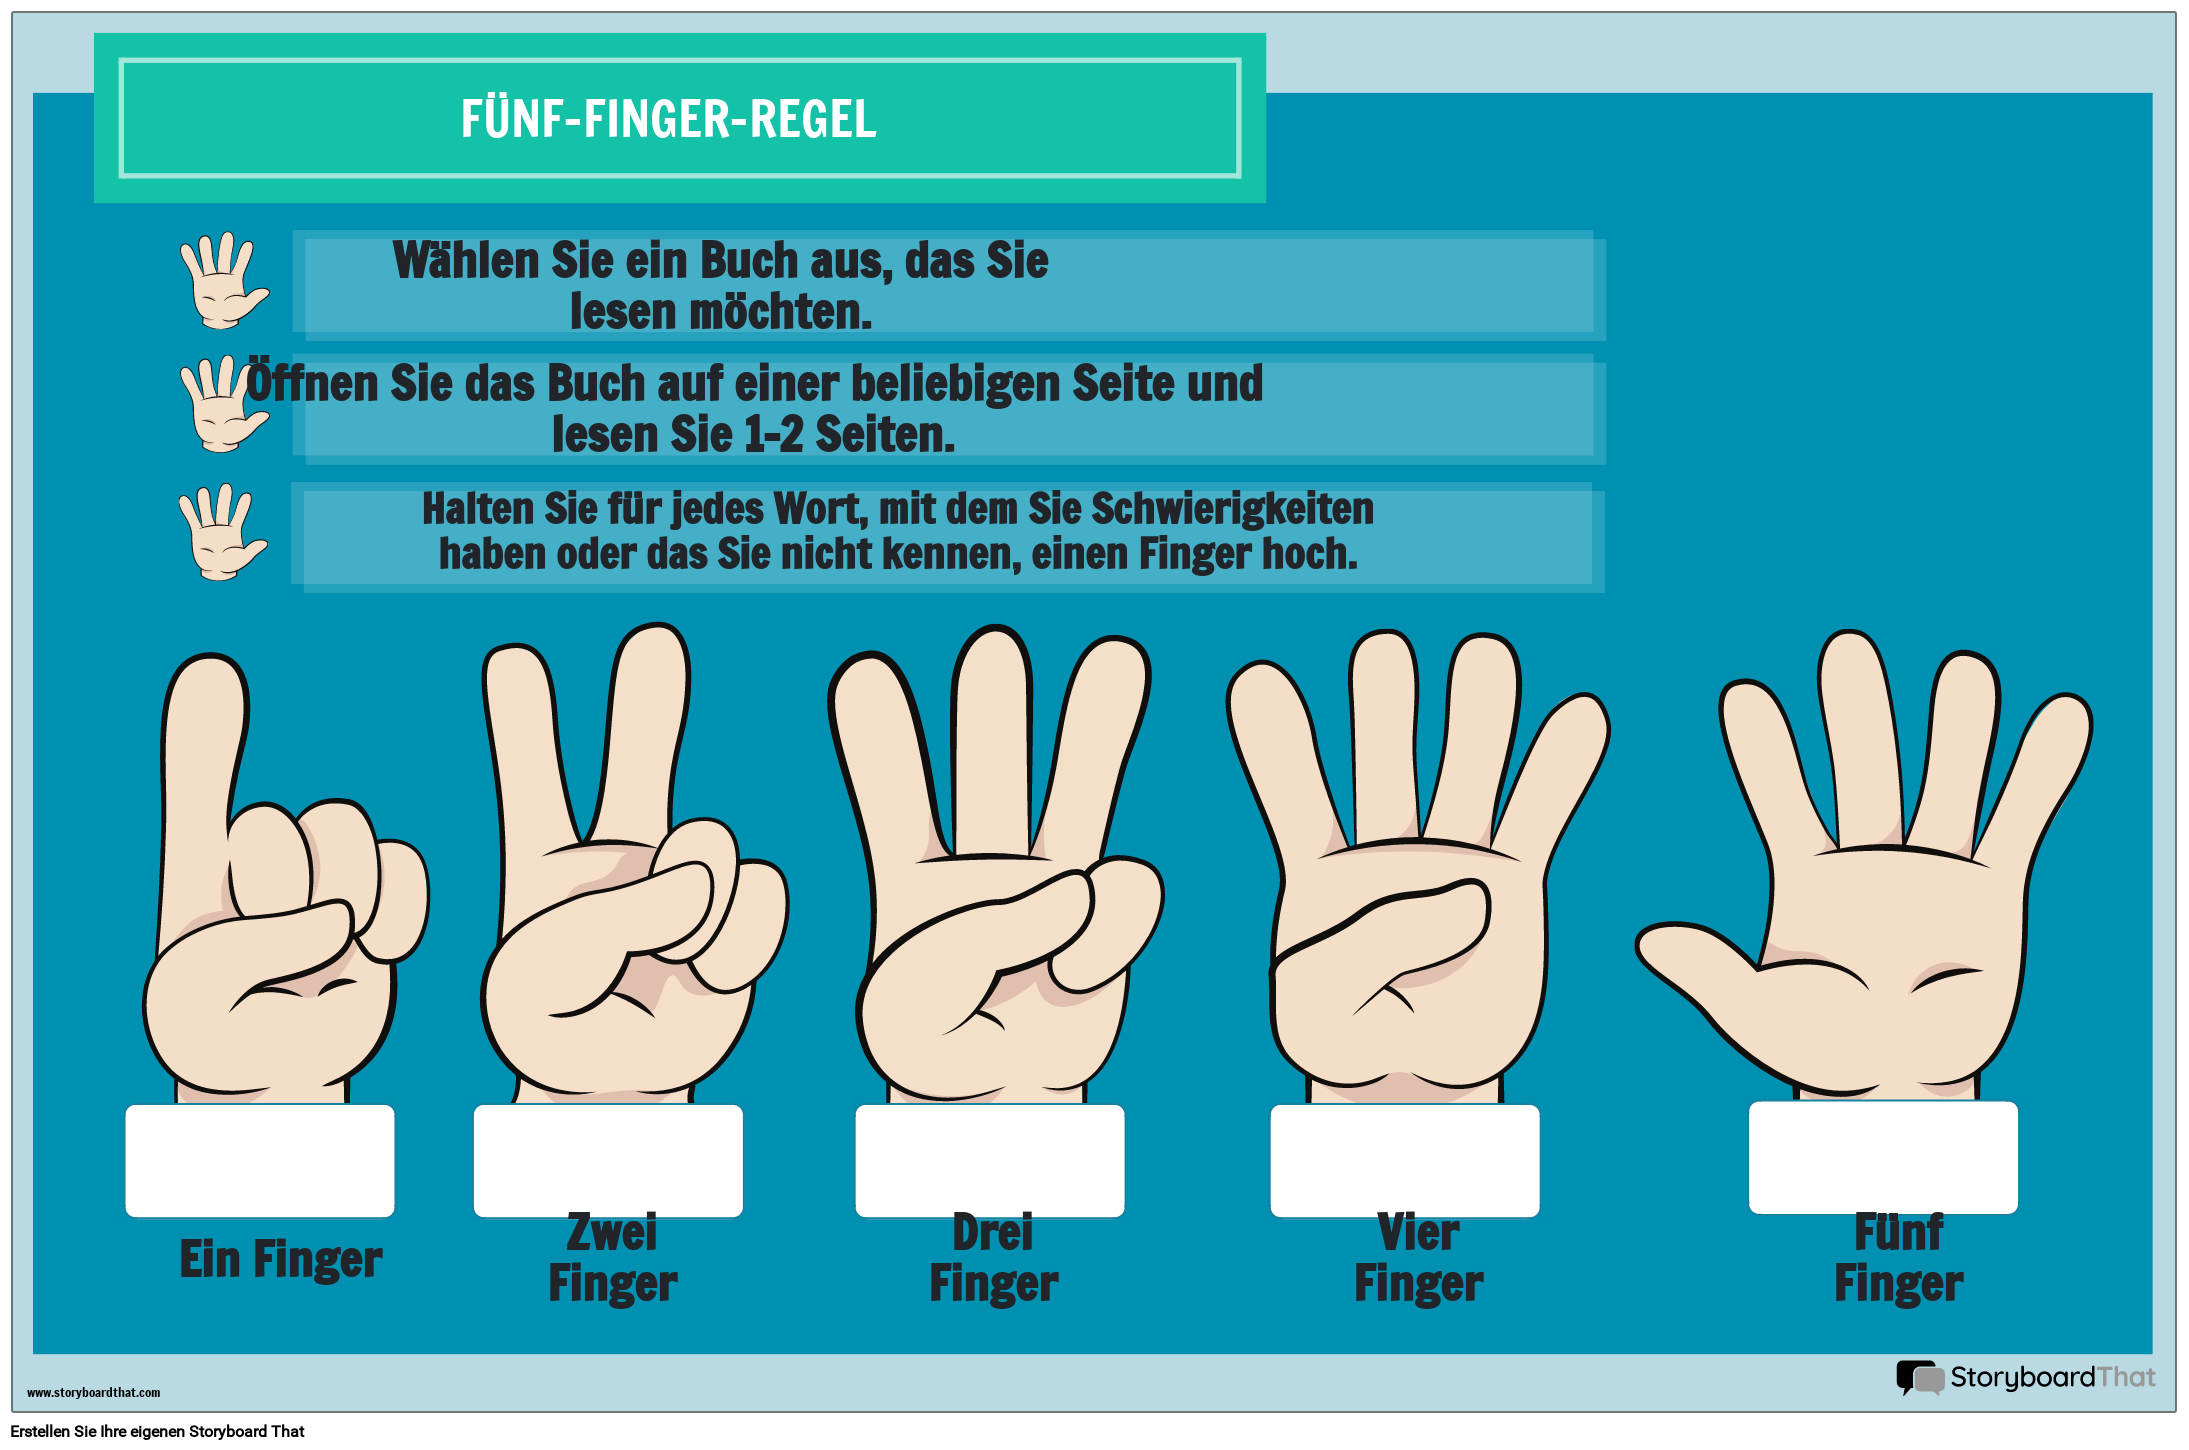 5-Finger-Regel – Genau das Richtige Buchplakat